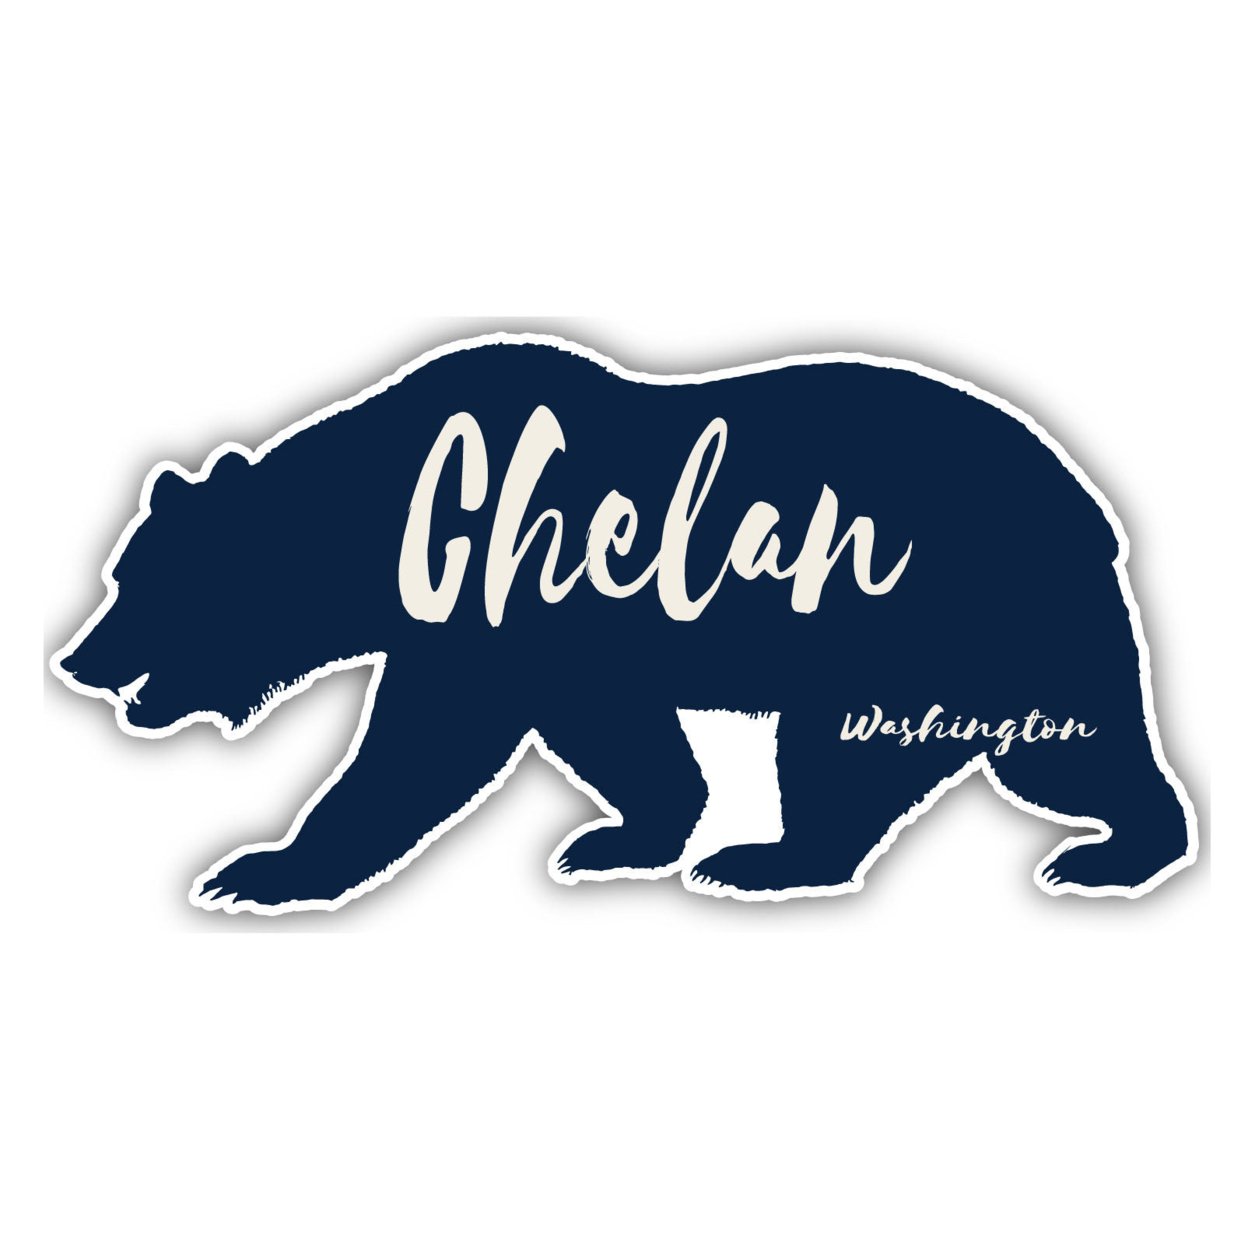 Chelan Washington Souvenir Decorative Stickers (Choose Theme And Size) - 4-Pack, 10-Inch, Camp Life